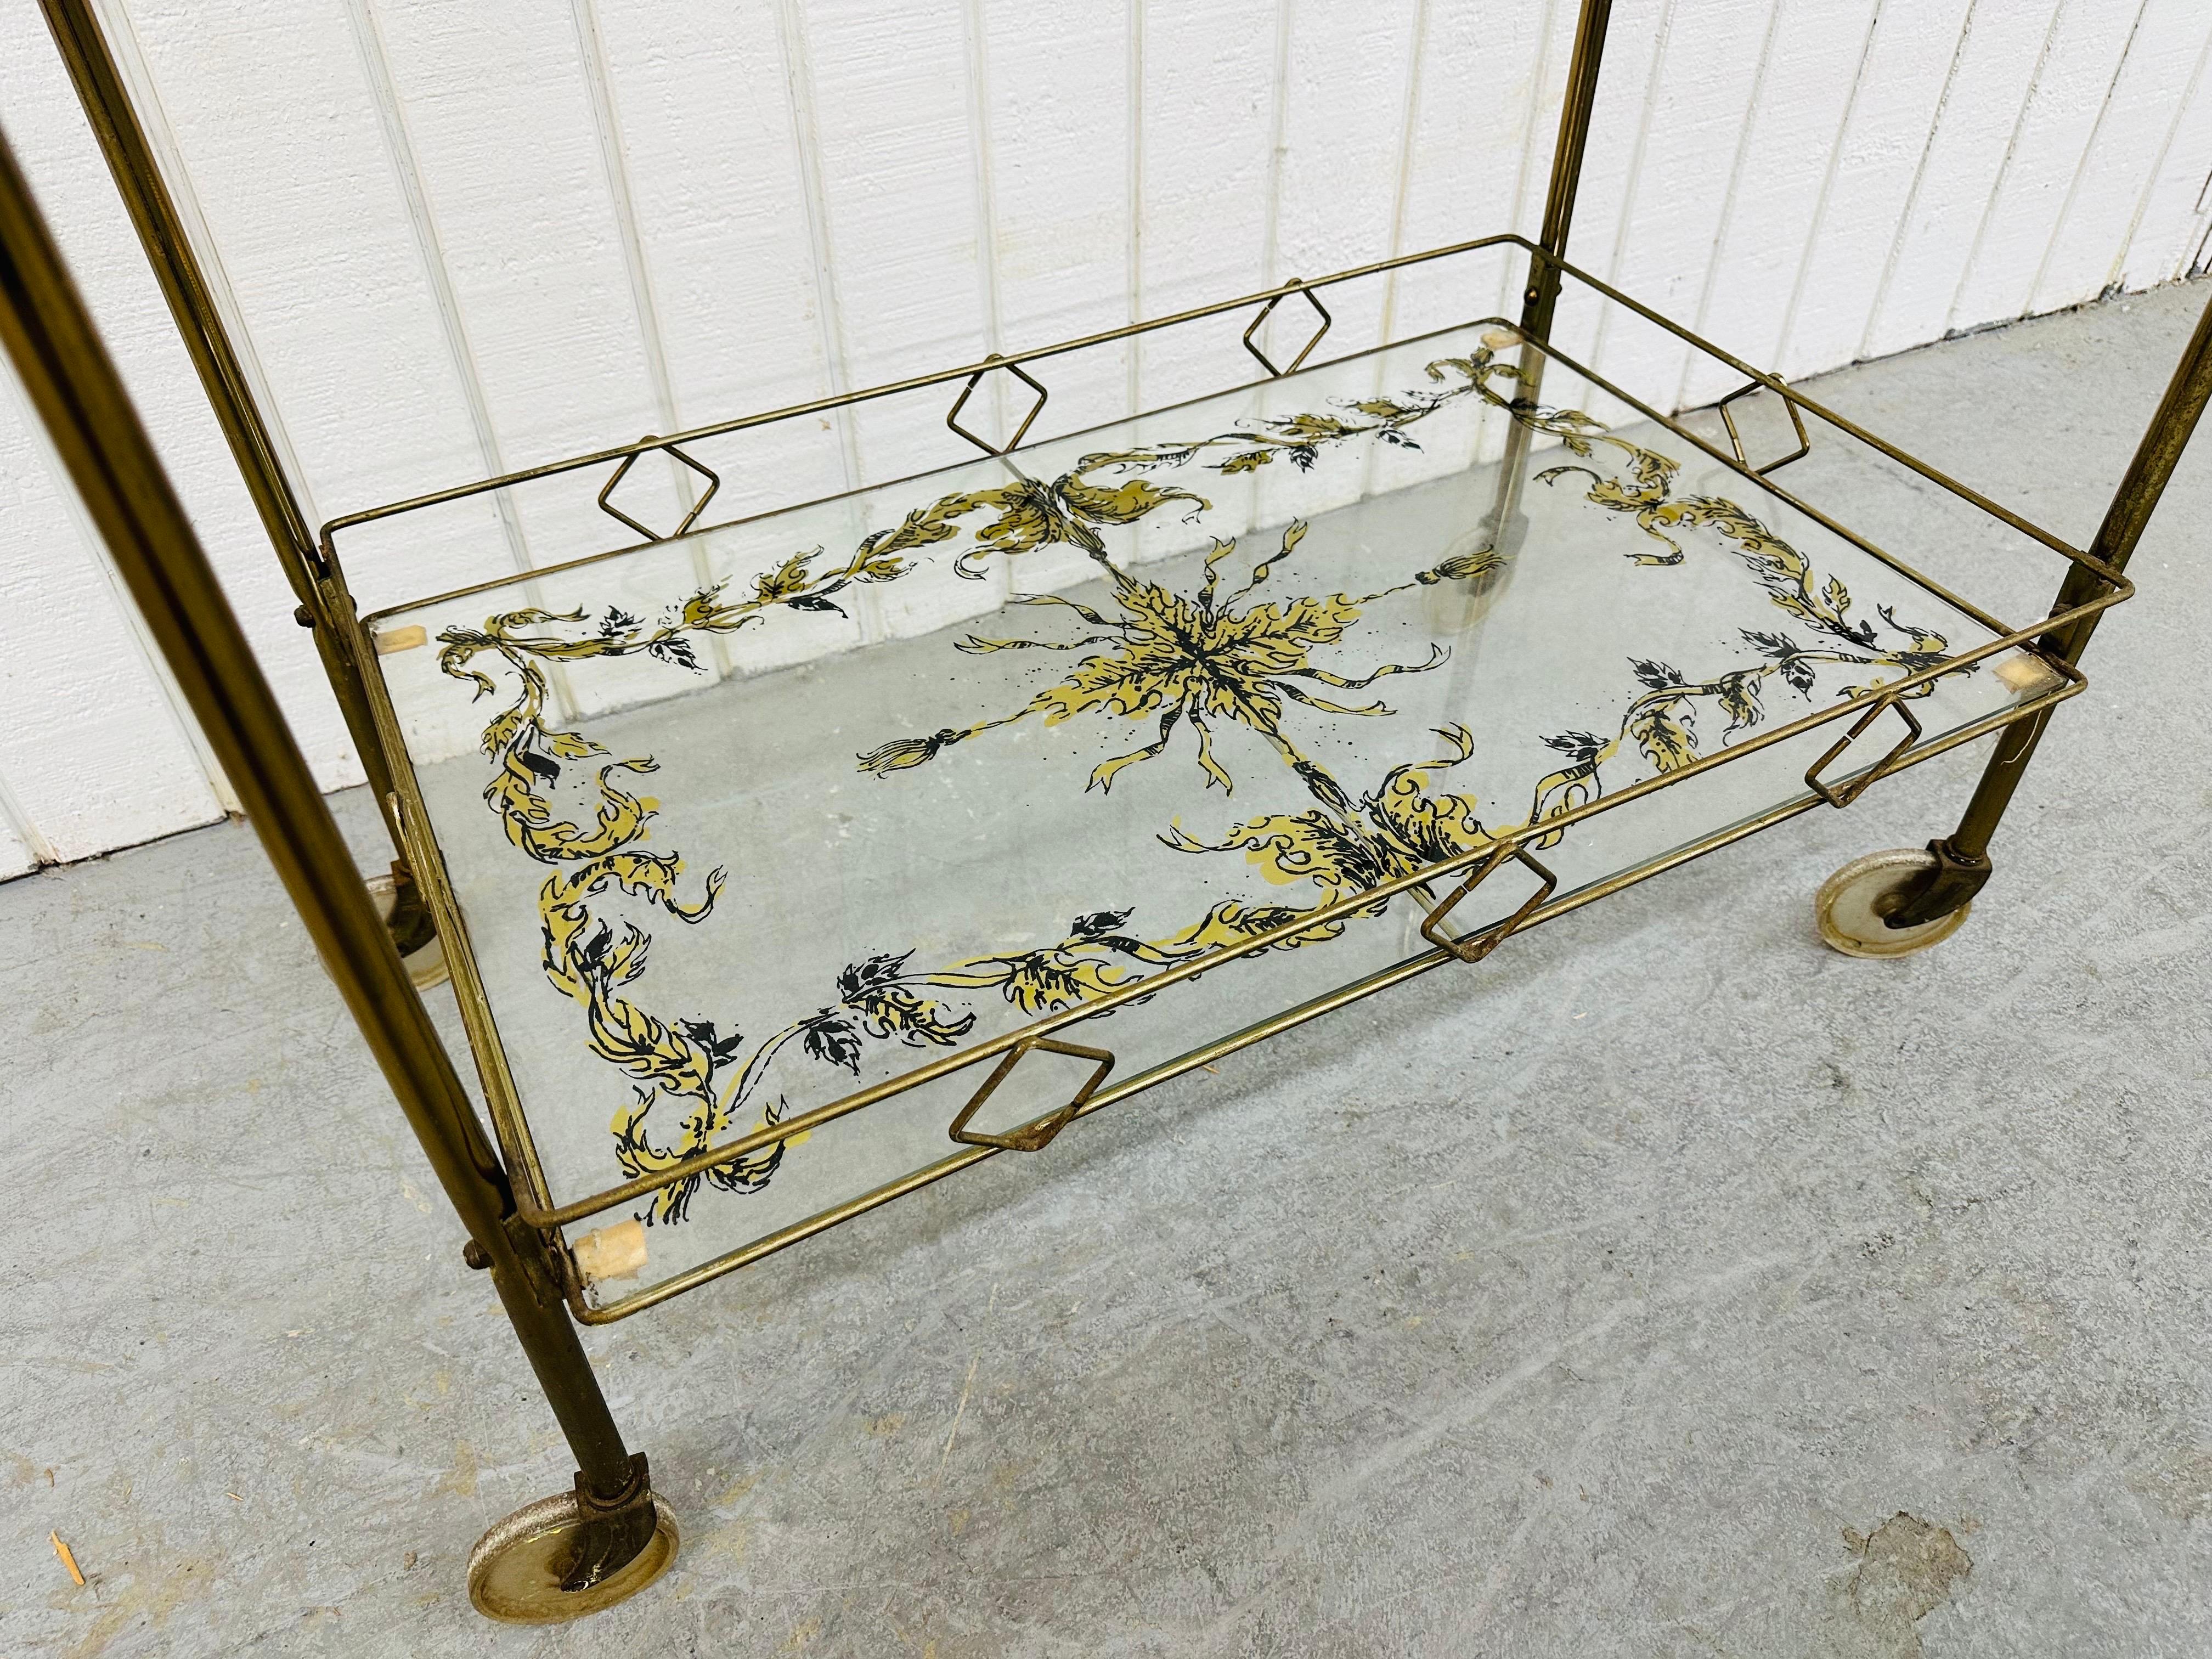 20th Century Mid-Century Modern Brass & Glass Bar Cart For Sale